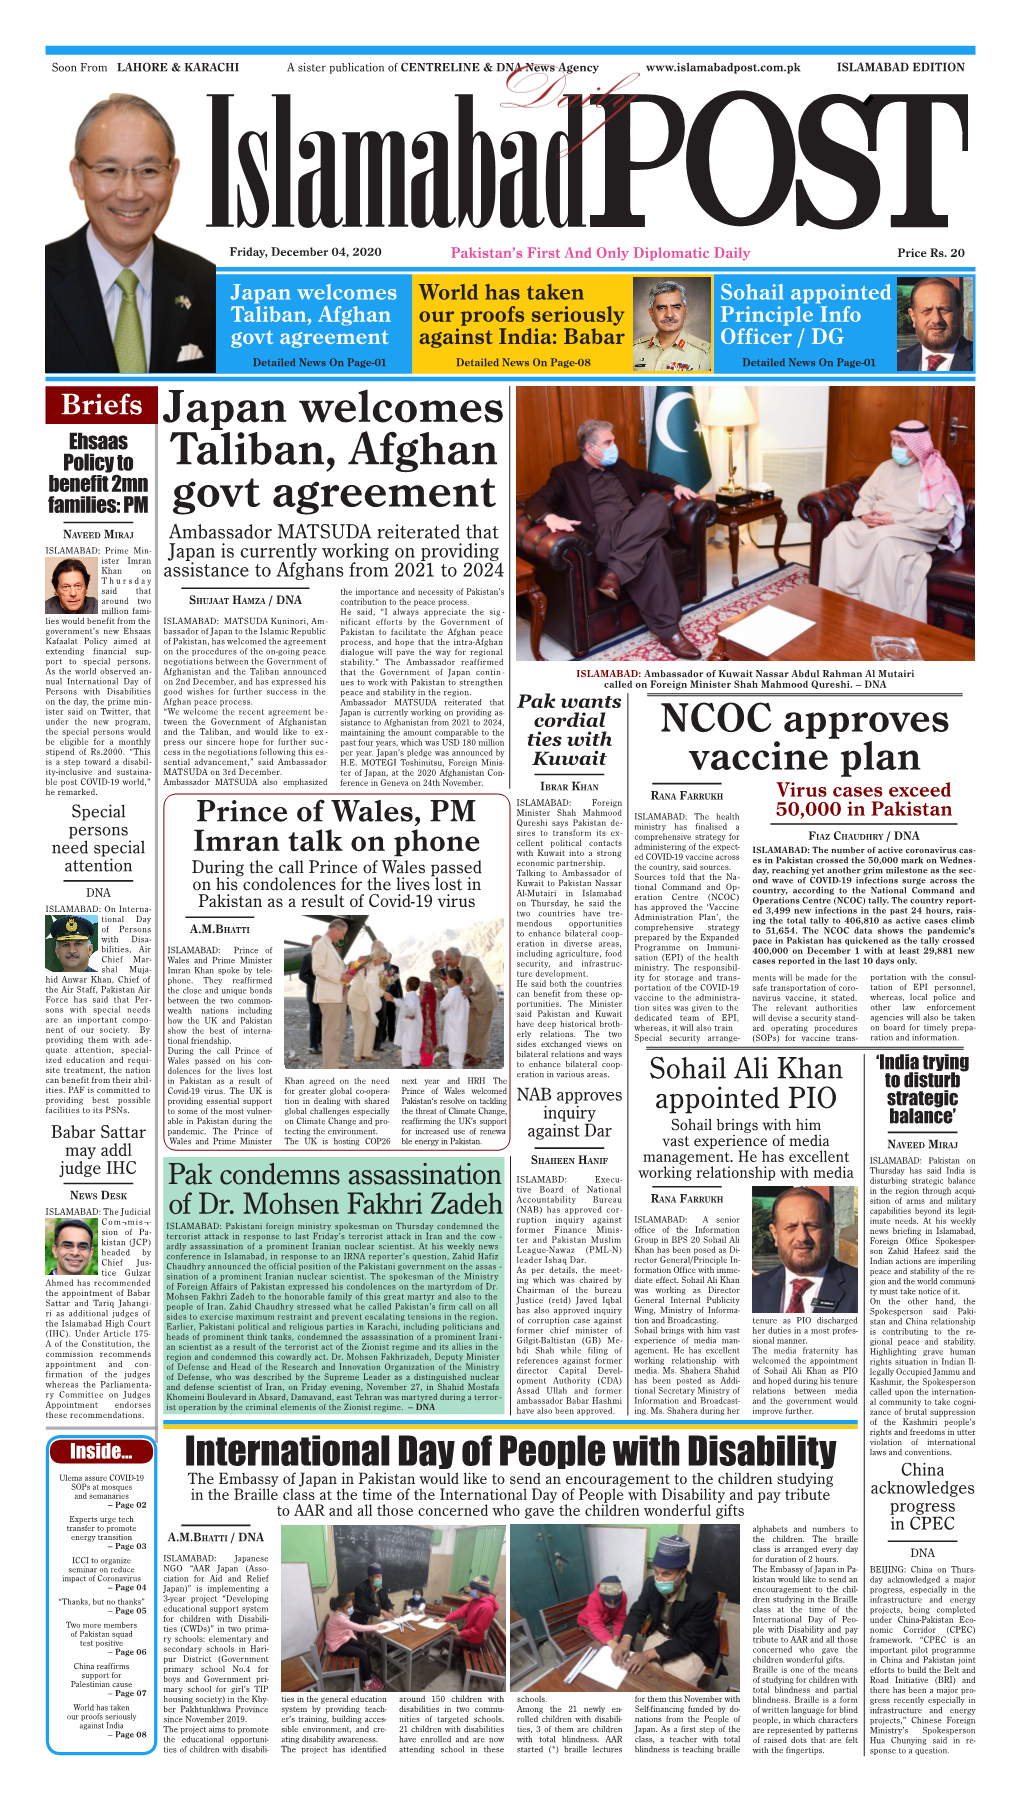 Briefs Japan Welcomes Taliban, Afghan Govt